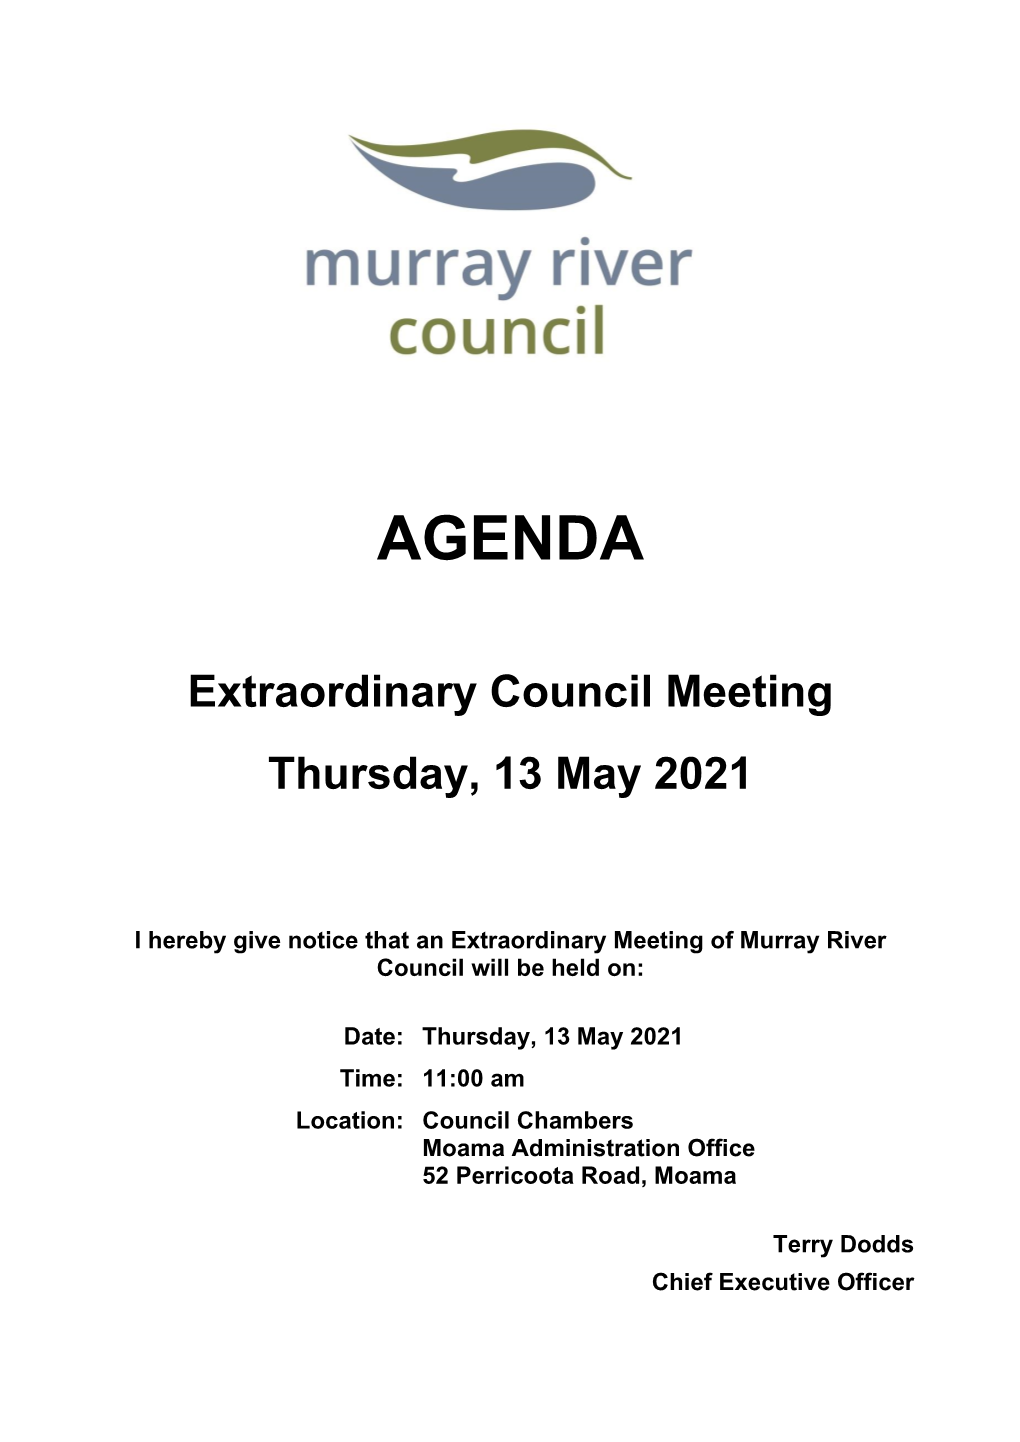 Agenda of Extraordinary Council Meeting